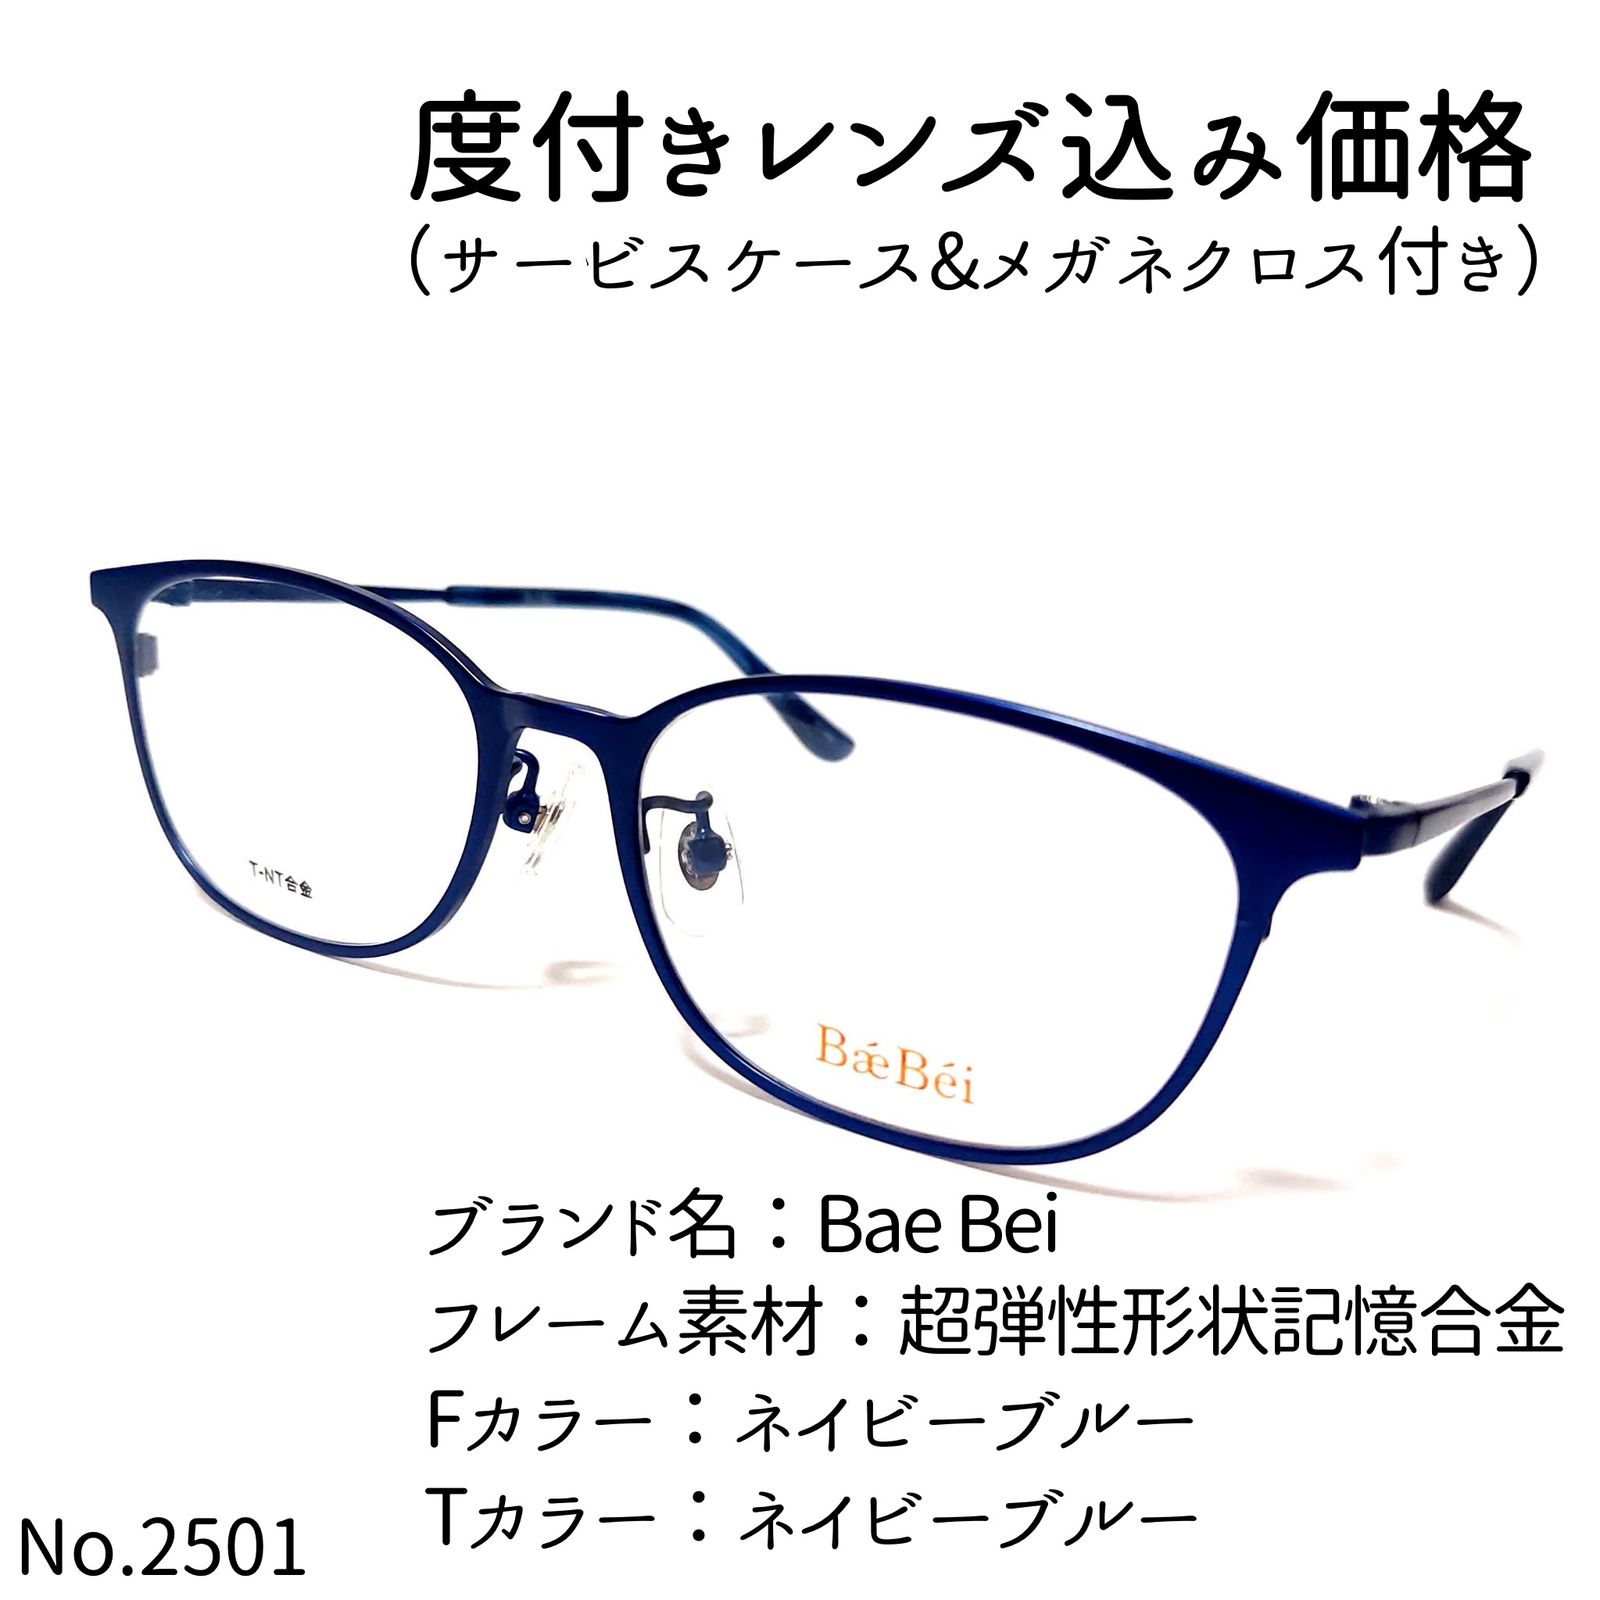 No.2501メガネ Bae Bei【度数入り込み価格】-